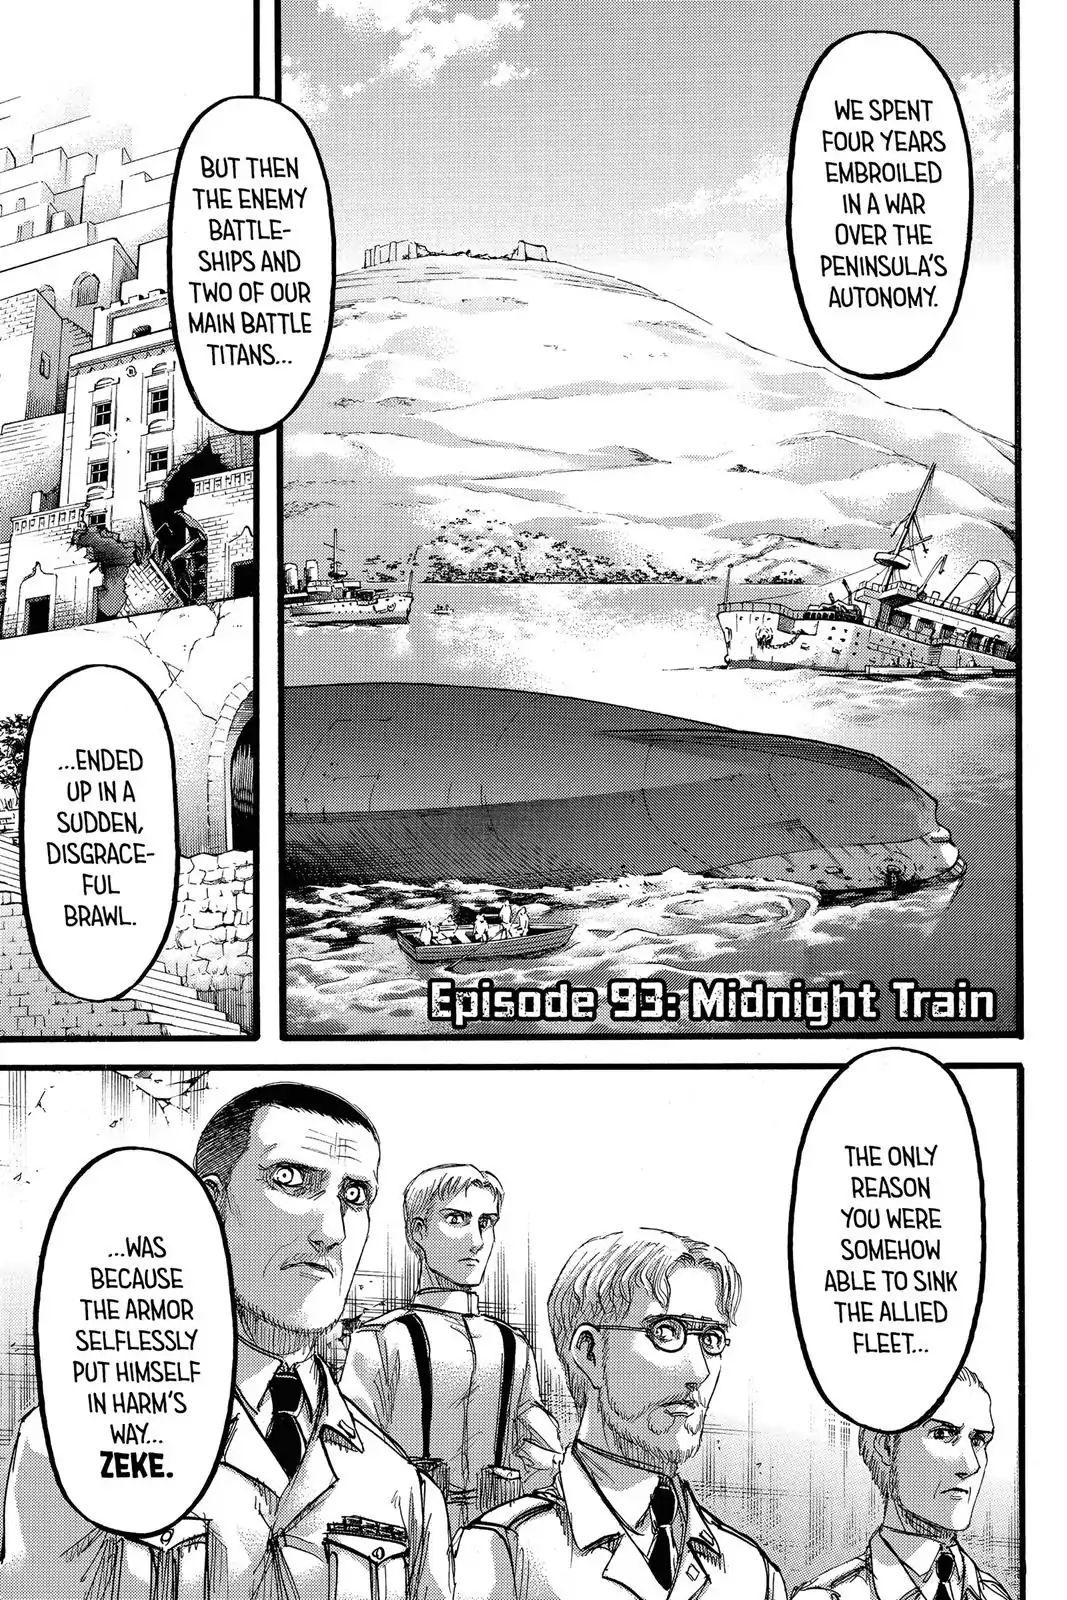 Attack On Titan, Chapter 88 - Attack On Titan Manga Online